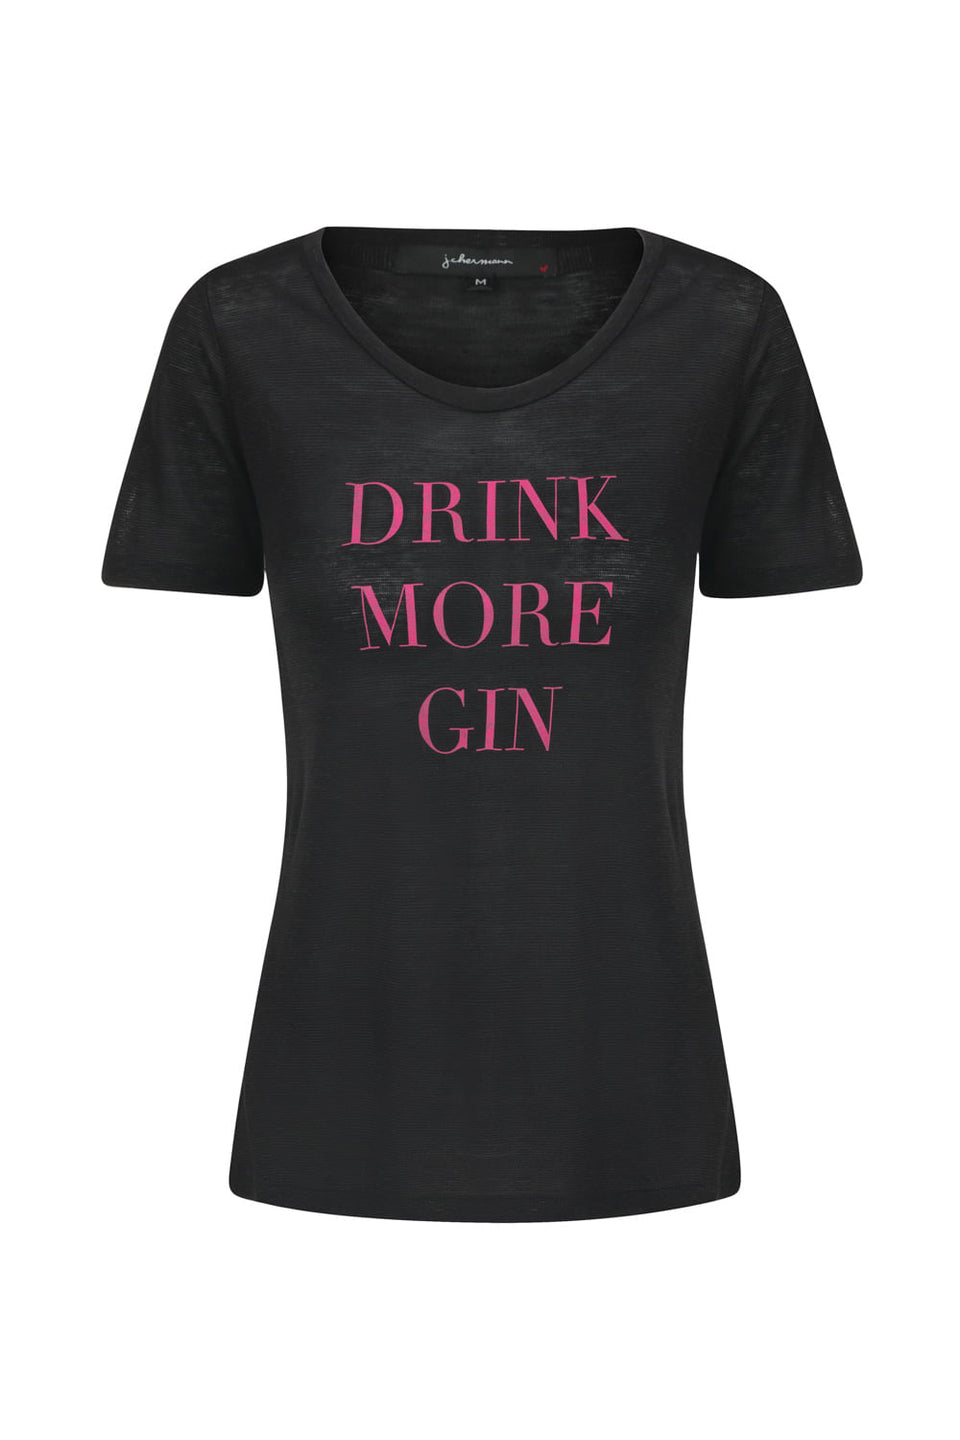 Camiseta Drink More Gin Preto